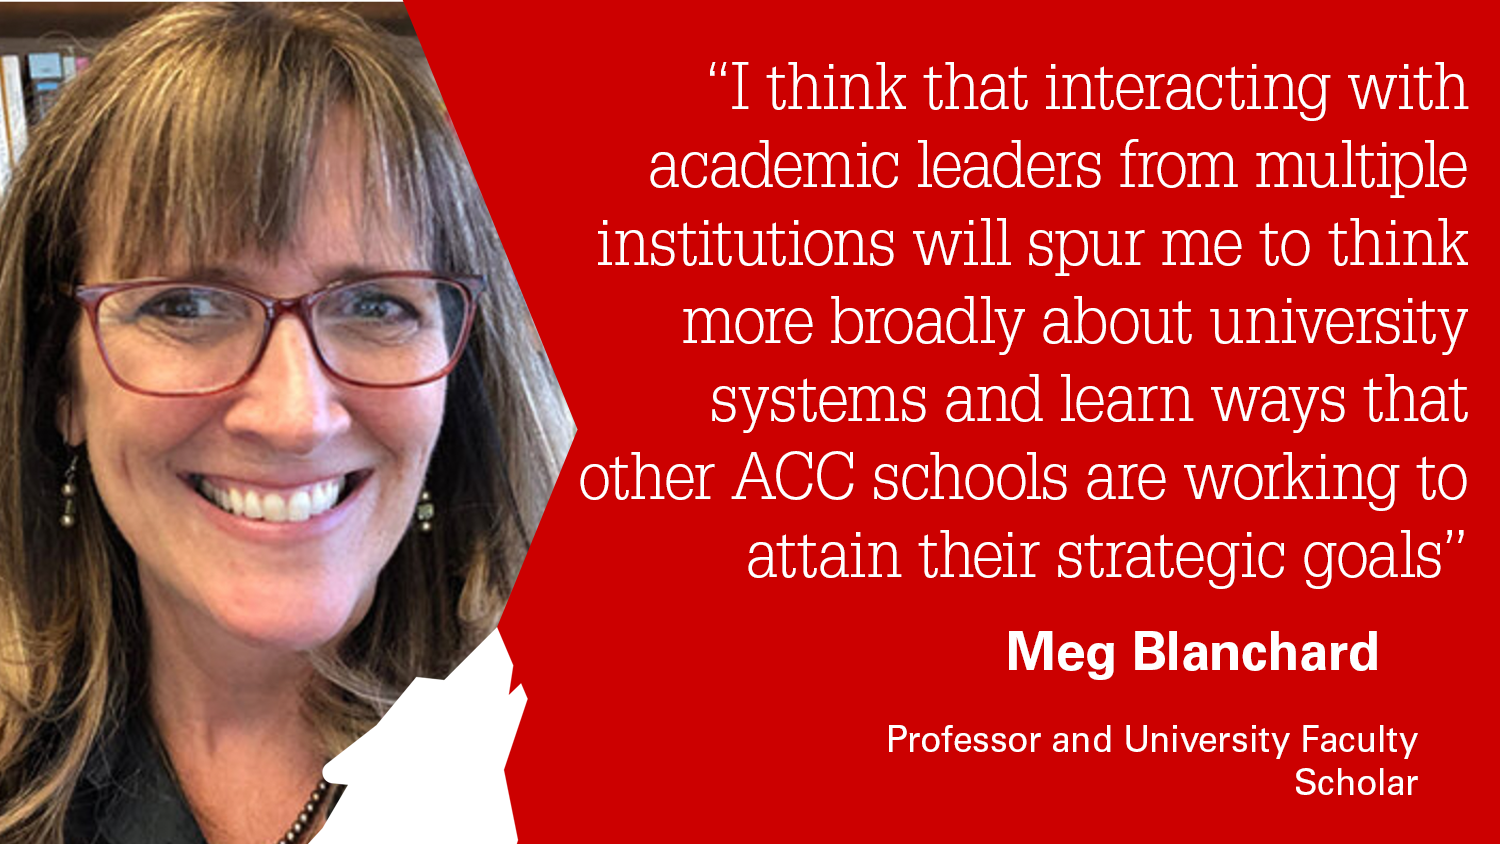 Professor and University Faculty Scholar Meg Blanchard